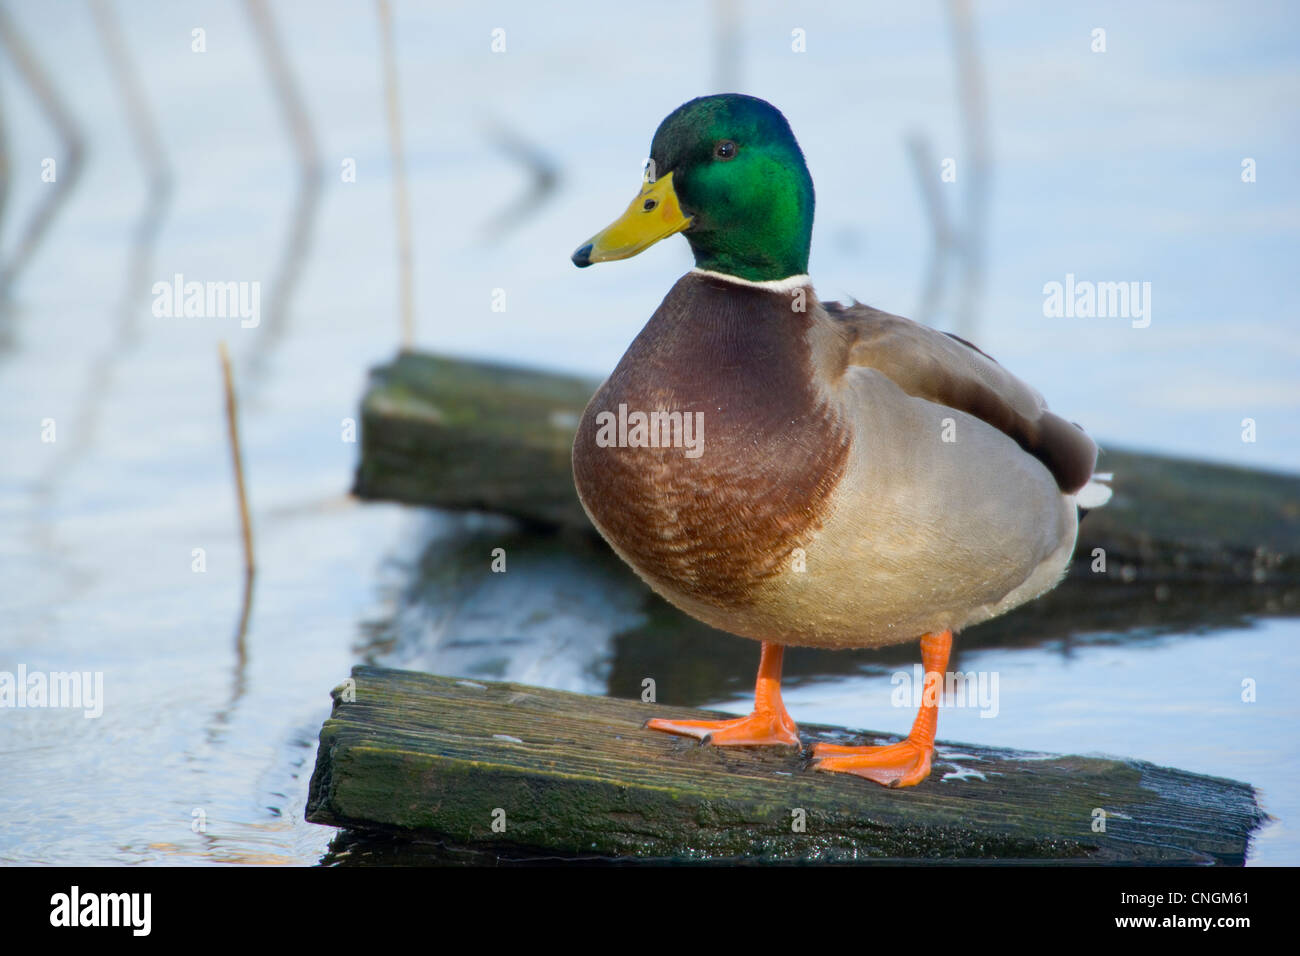 Male Mallard duck Anas platyrhynchos standing on wooden platform. Berkshire, UK. Stock Photo